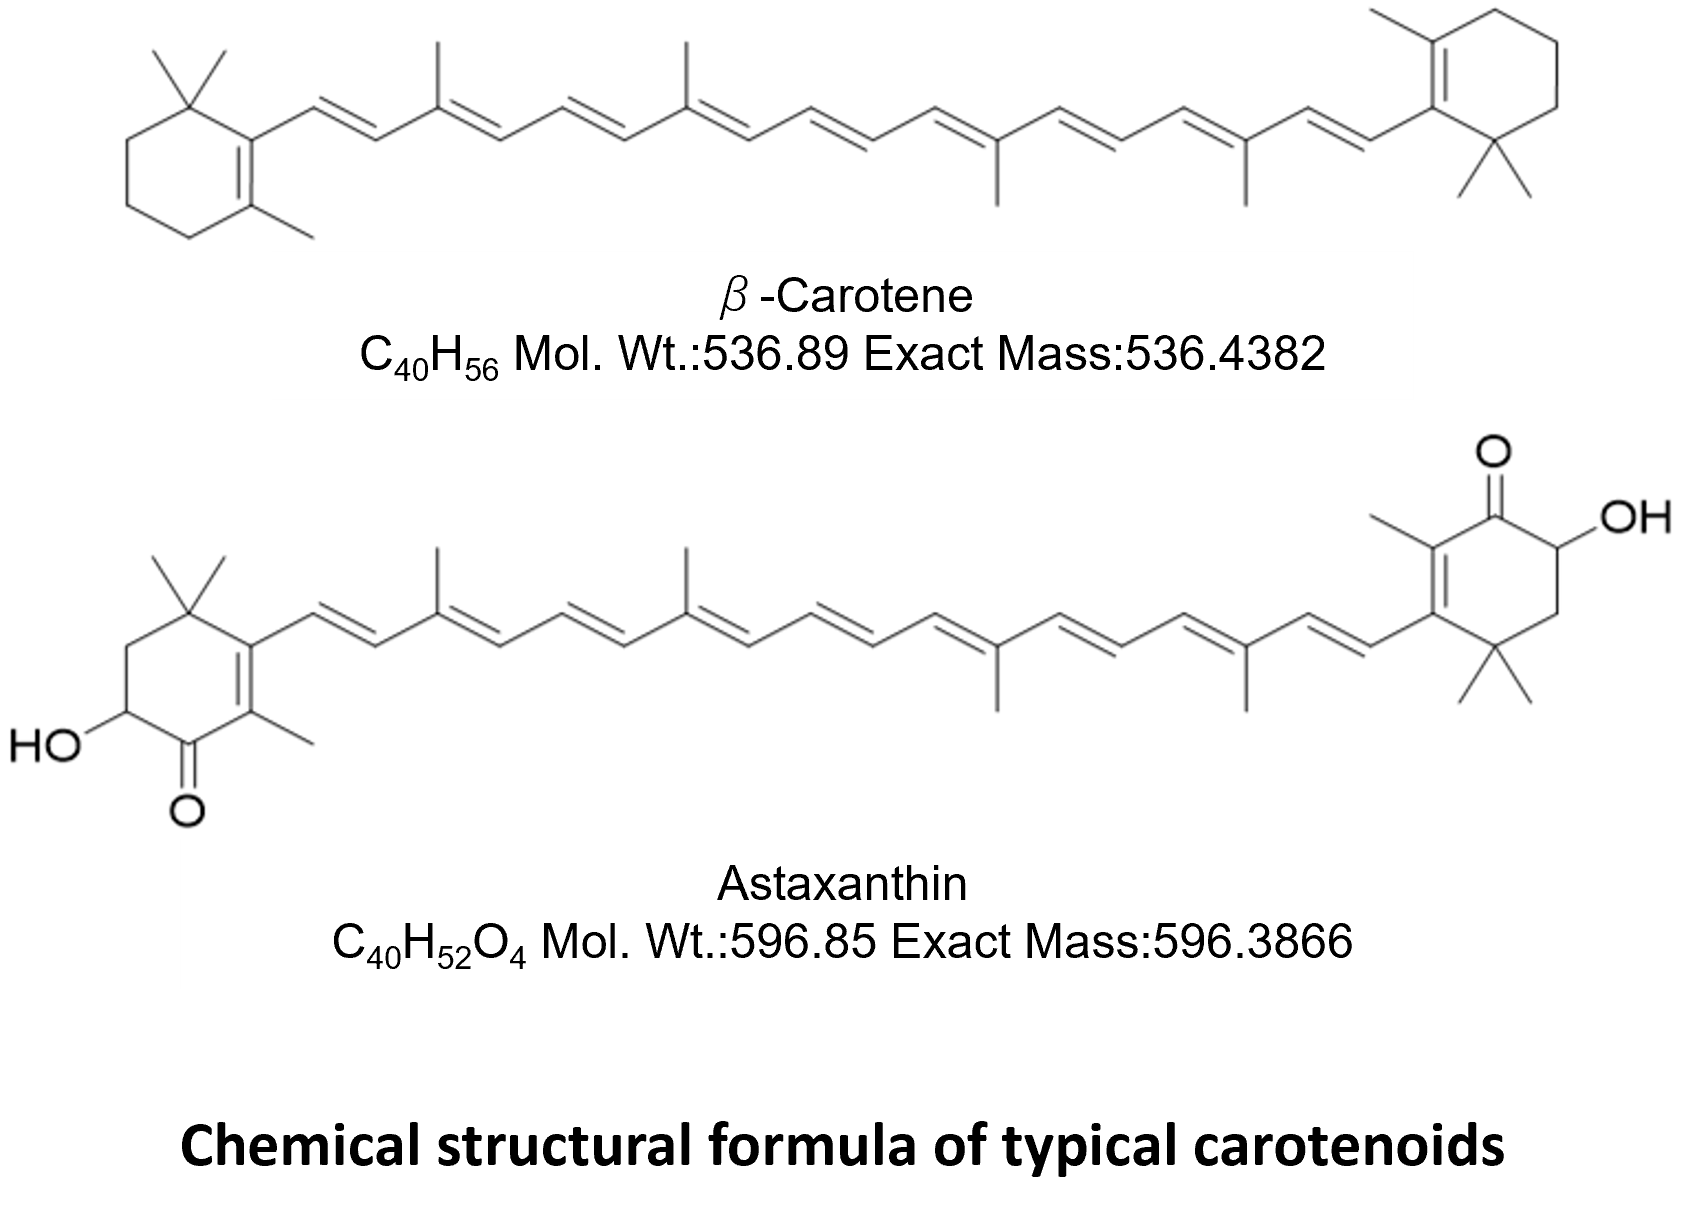 Chemical structural formula of typical carotenoids, beta-Carotene C40H56 Mol. Wt.:536.89 Exact Mass:536.4382, Astaxanthin C40H52O4 Mol. Wt.:596.85 Exact Mass:596.3866